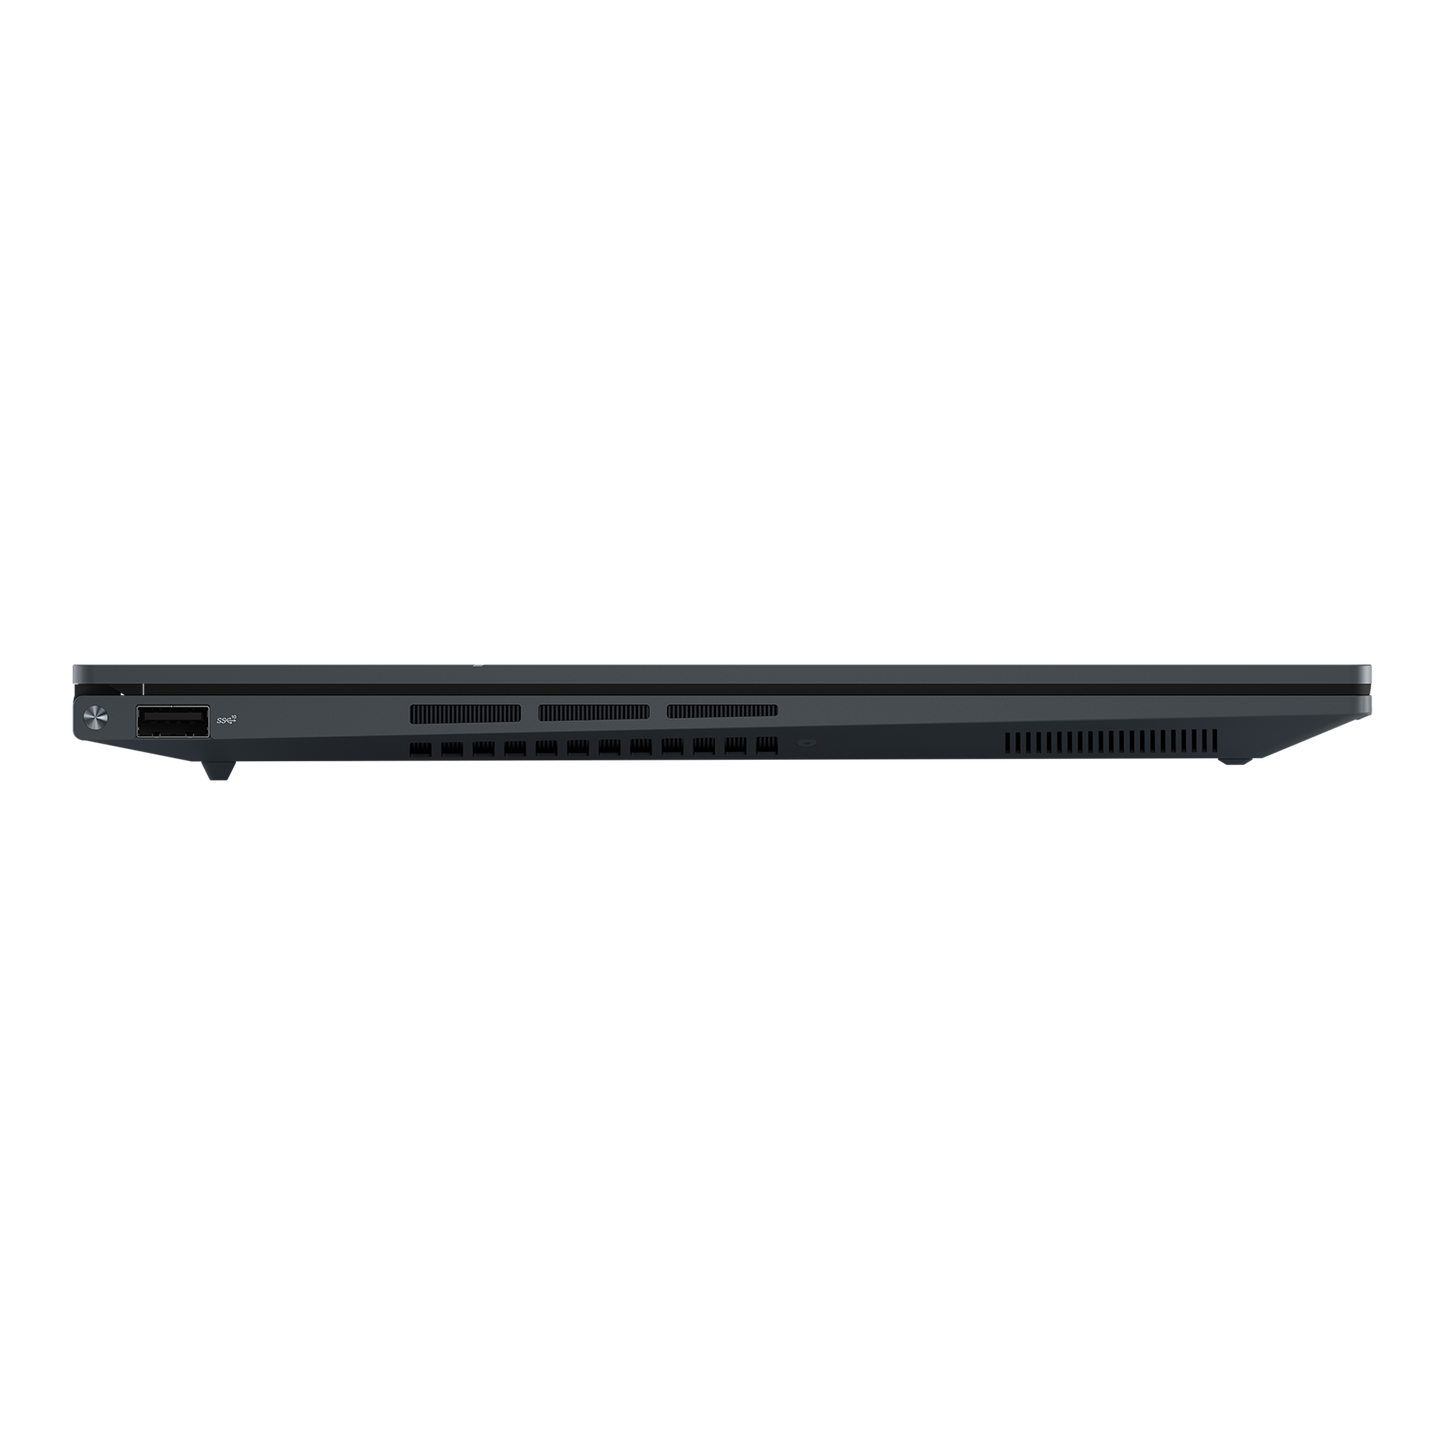 ASUS Zenbook 14X OLED Q410VA Laptop | Core i5 8GB 512GB | Inkwell Gray